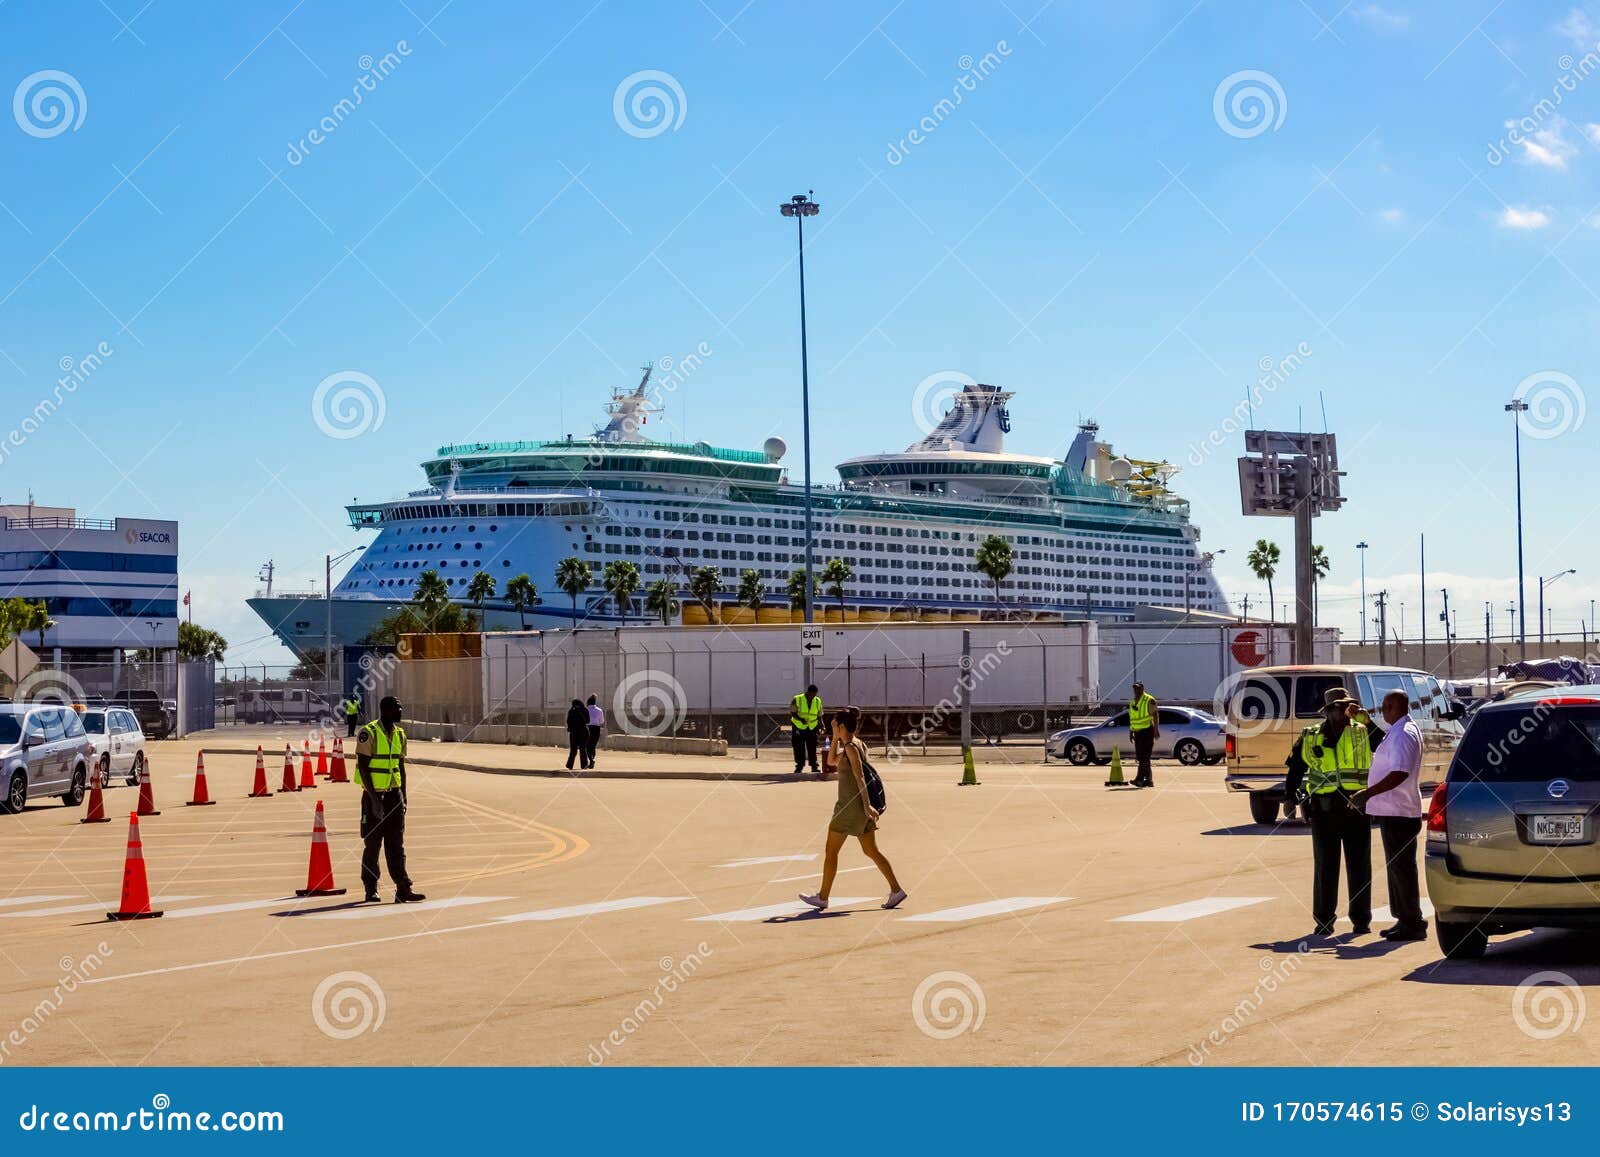 Fort Lauderdale - December 1, 2019: Royal Caribbean Cruise Ship Docked